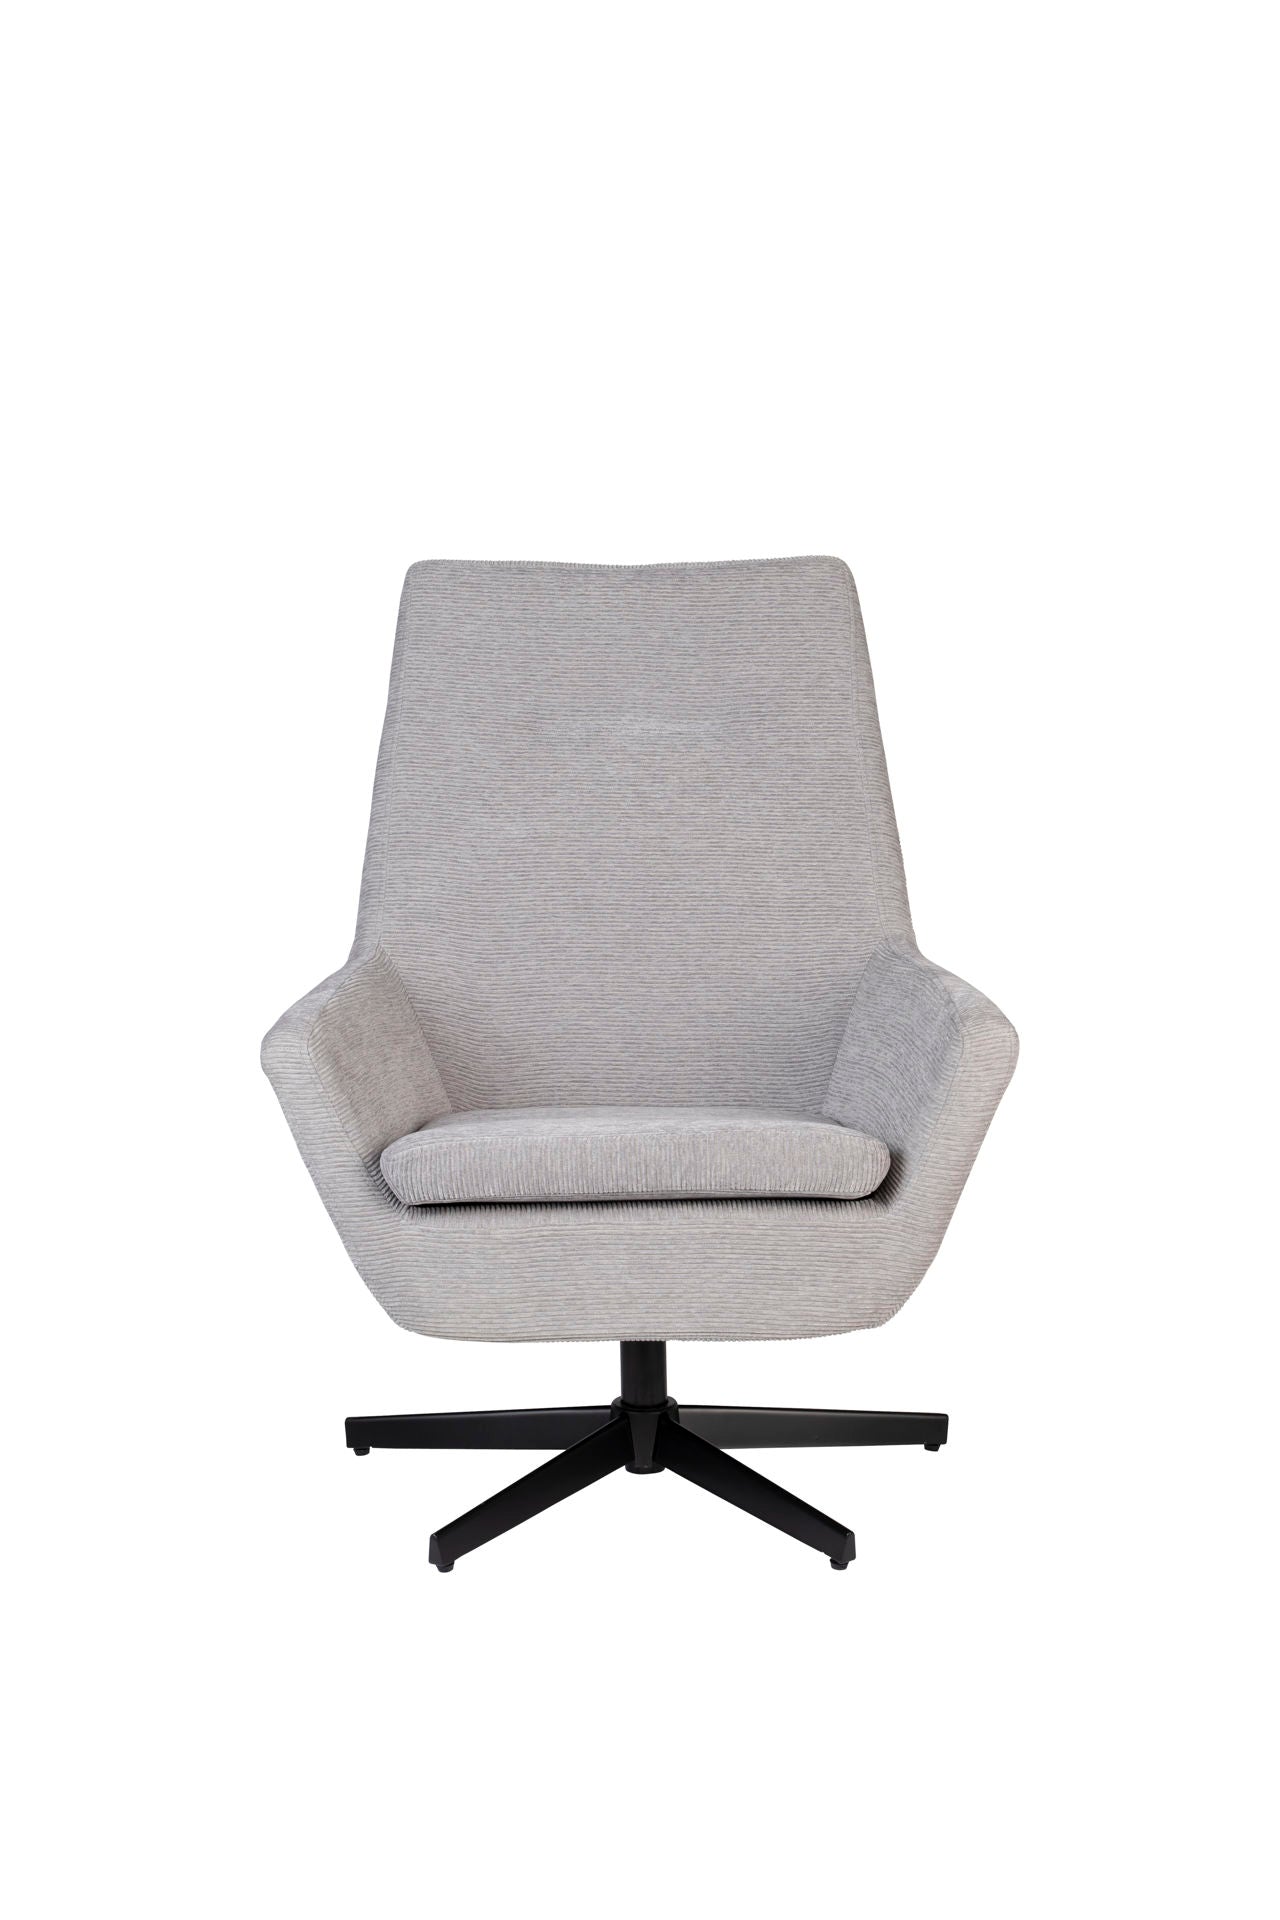 Nancy's Beachwood Lounge Chair - Industrial - Light gray - Polyester, Plywood, Iron - 79 cm x 76 cm x 98 cm